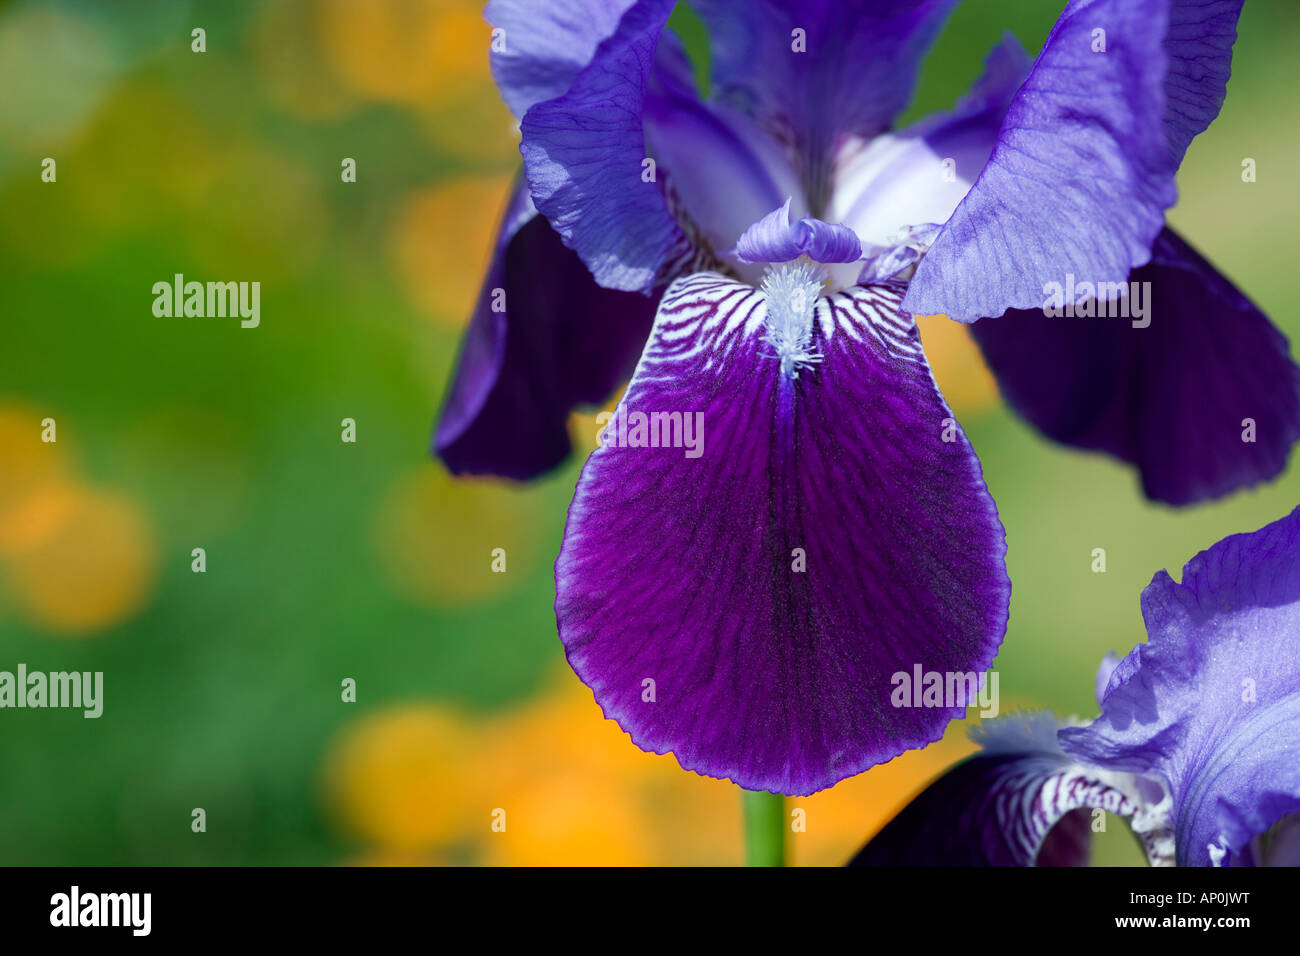 Stunning purple Iris flower in close up detail Stock Photo